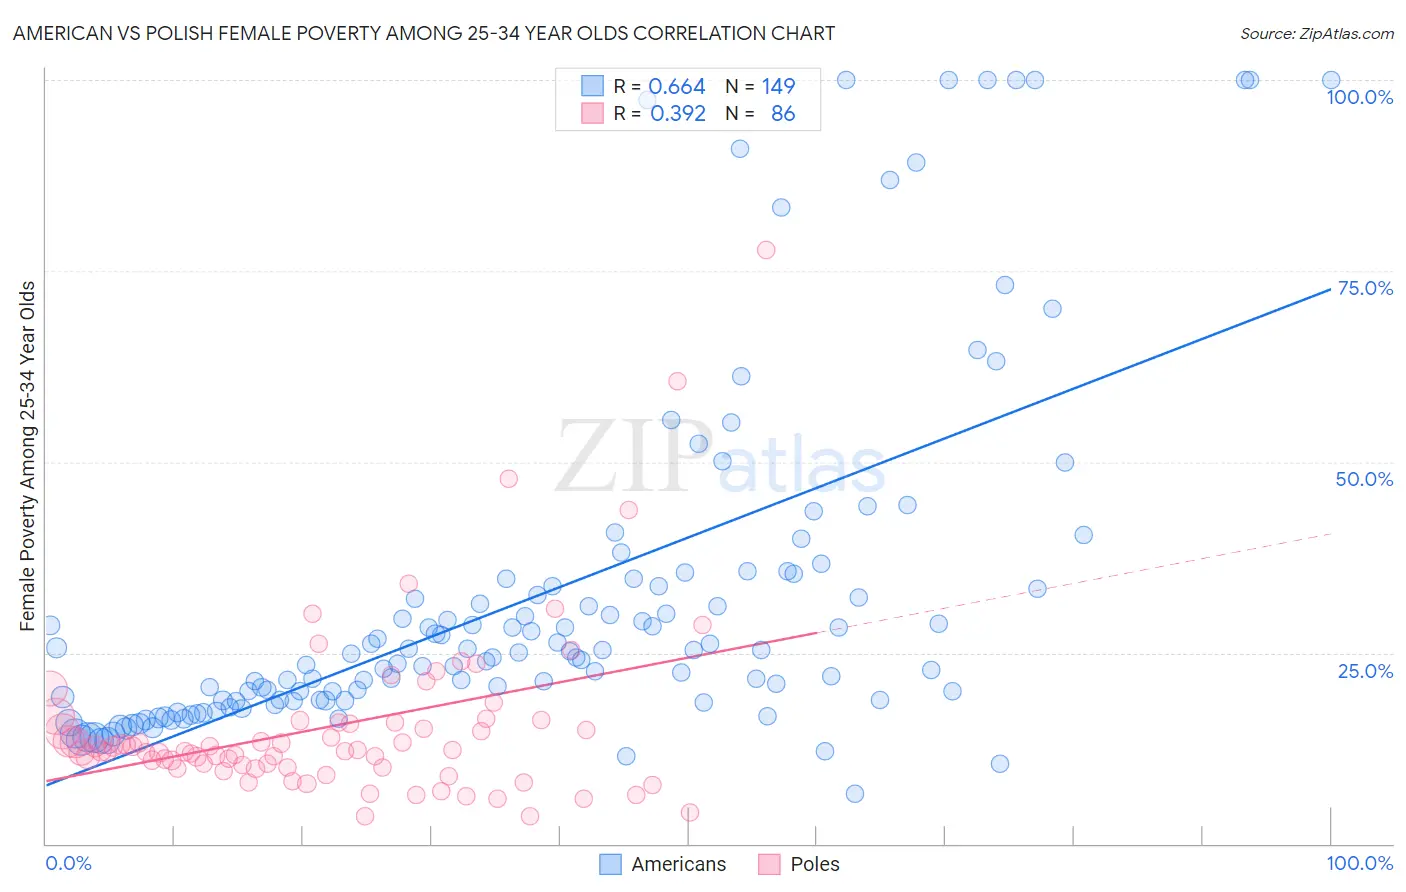 American vs Polish Female Poverty Among 25-34 Year Olds